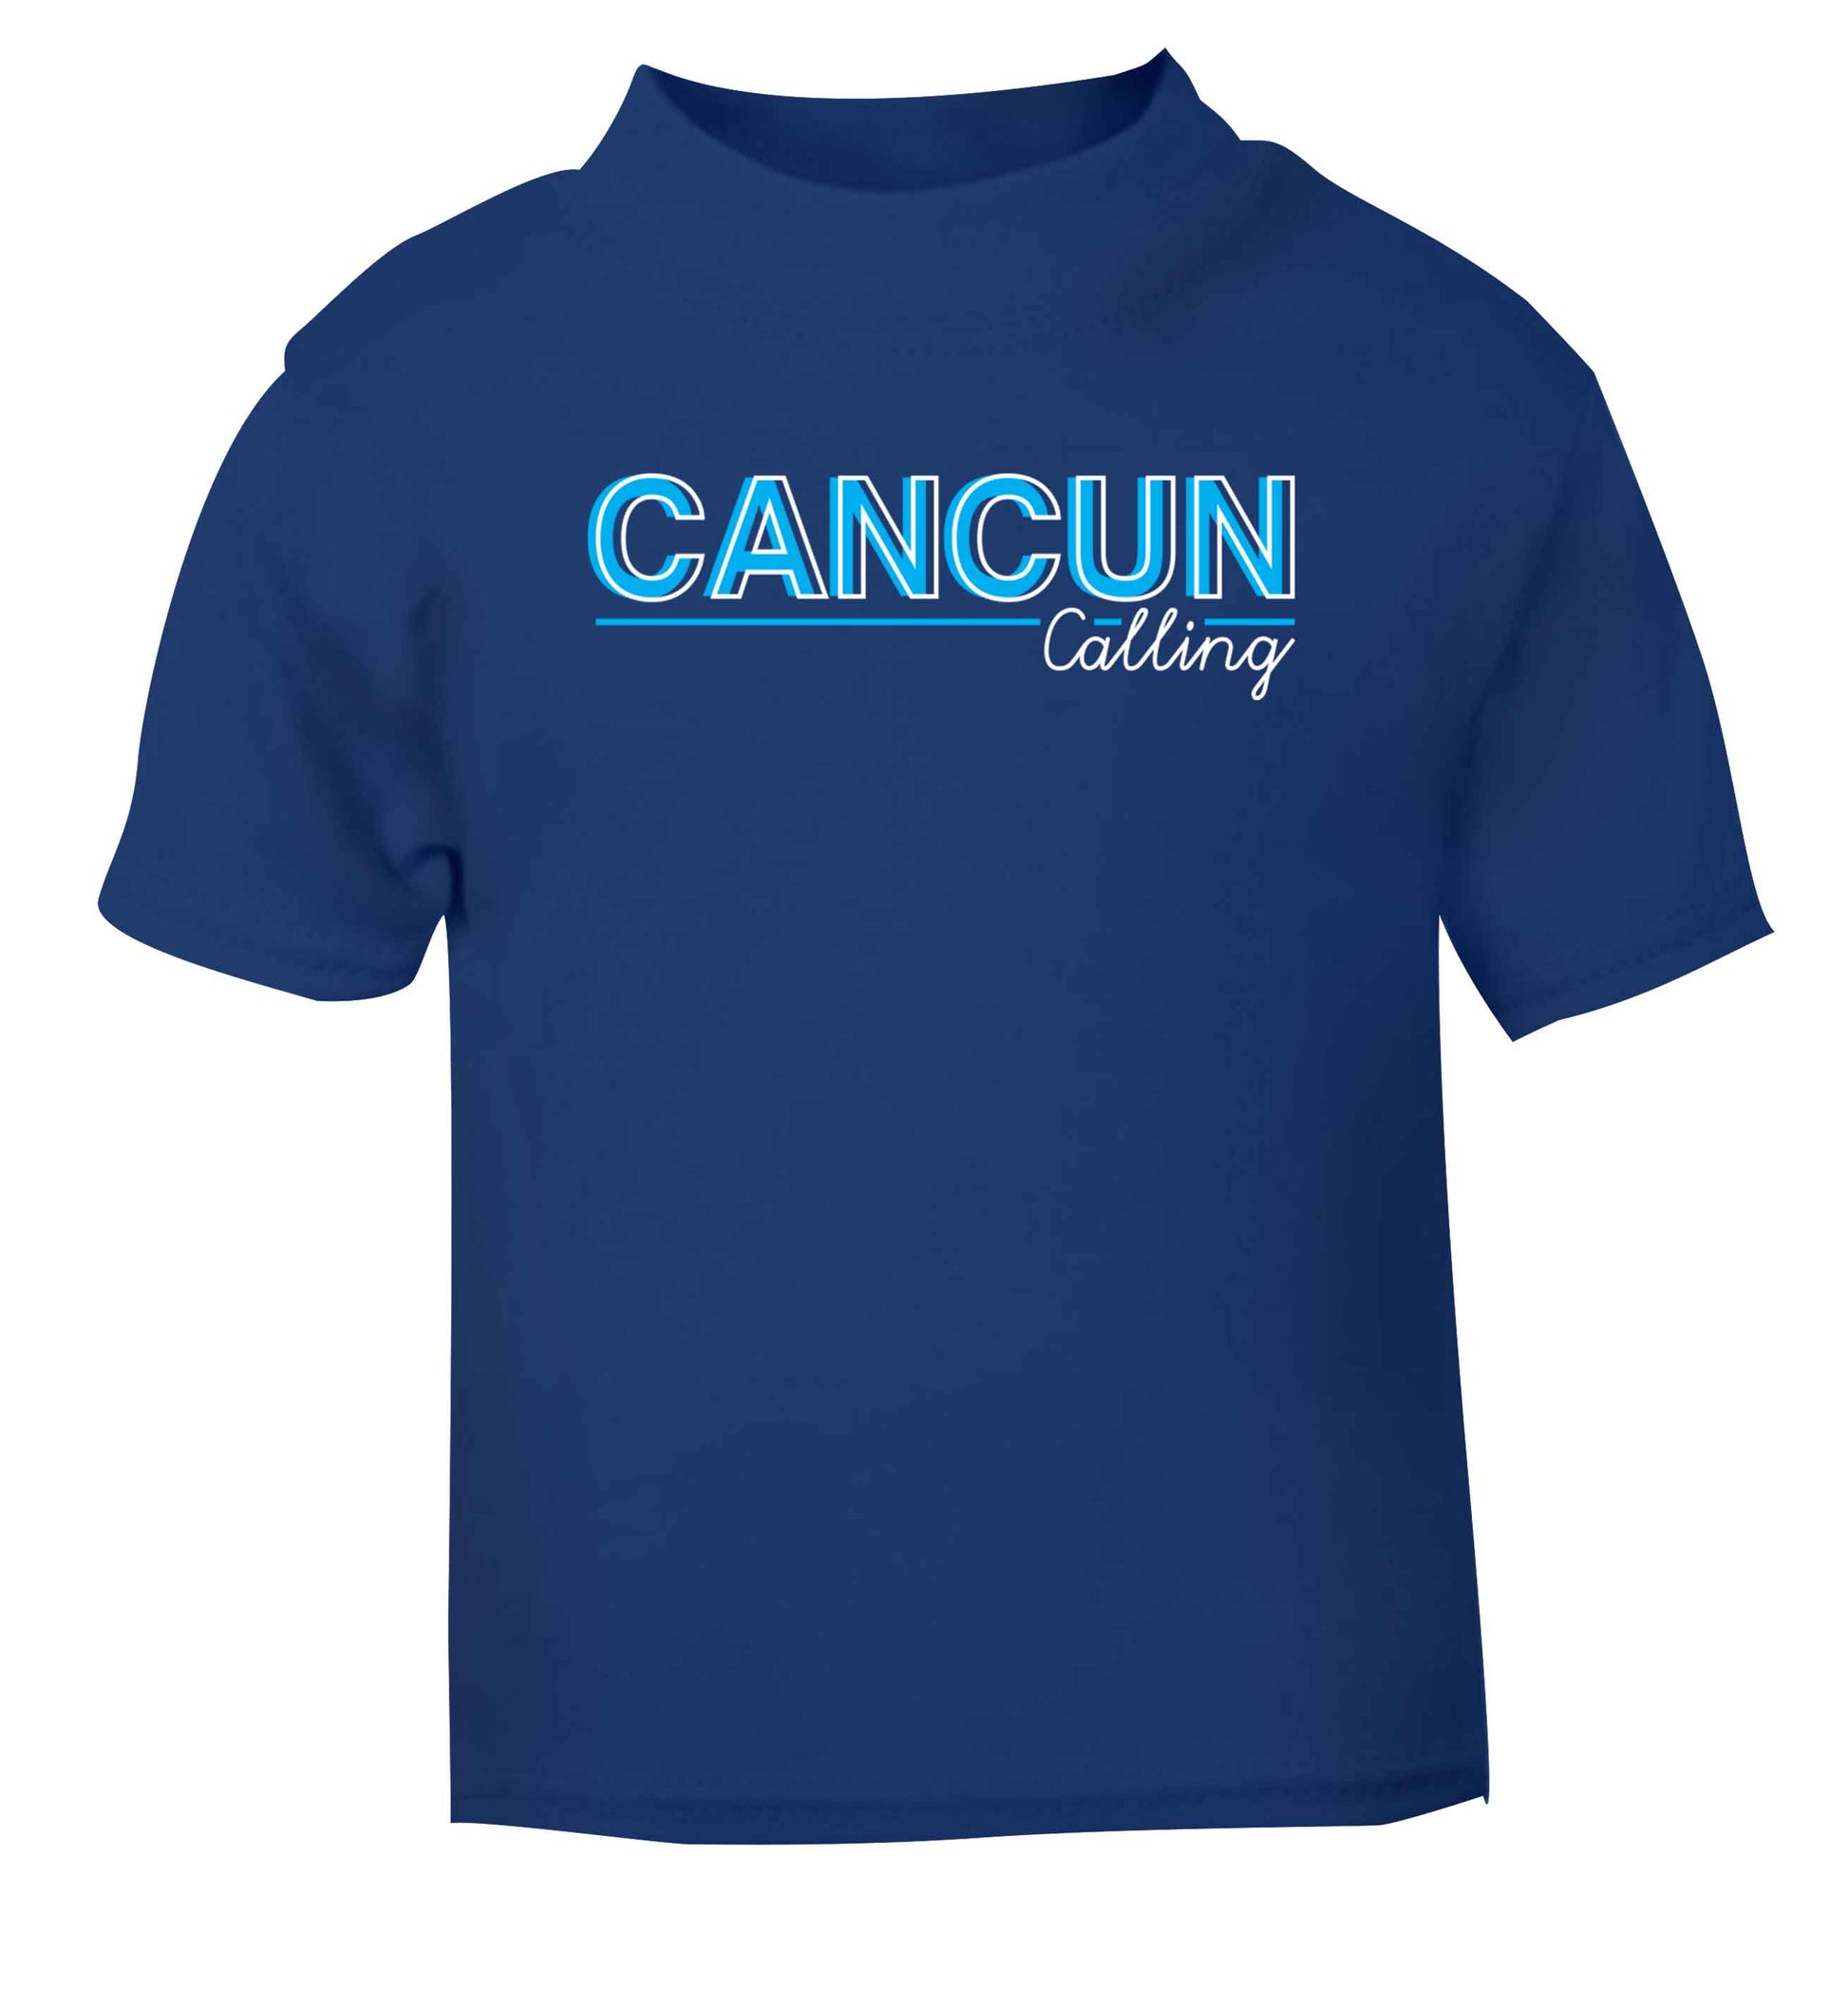 Cancun calling blue Baby Toddler Tshirt 2 Years